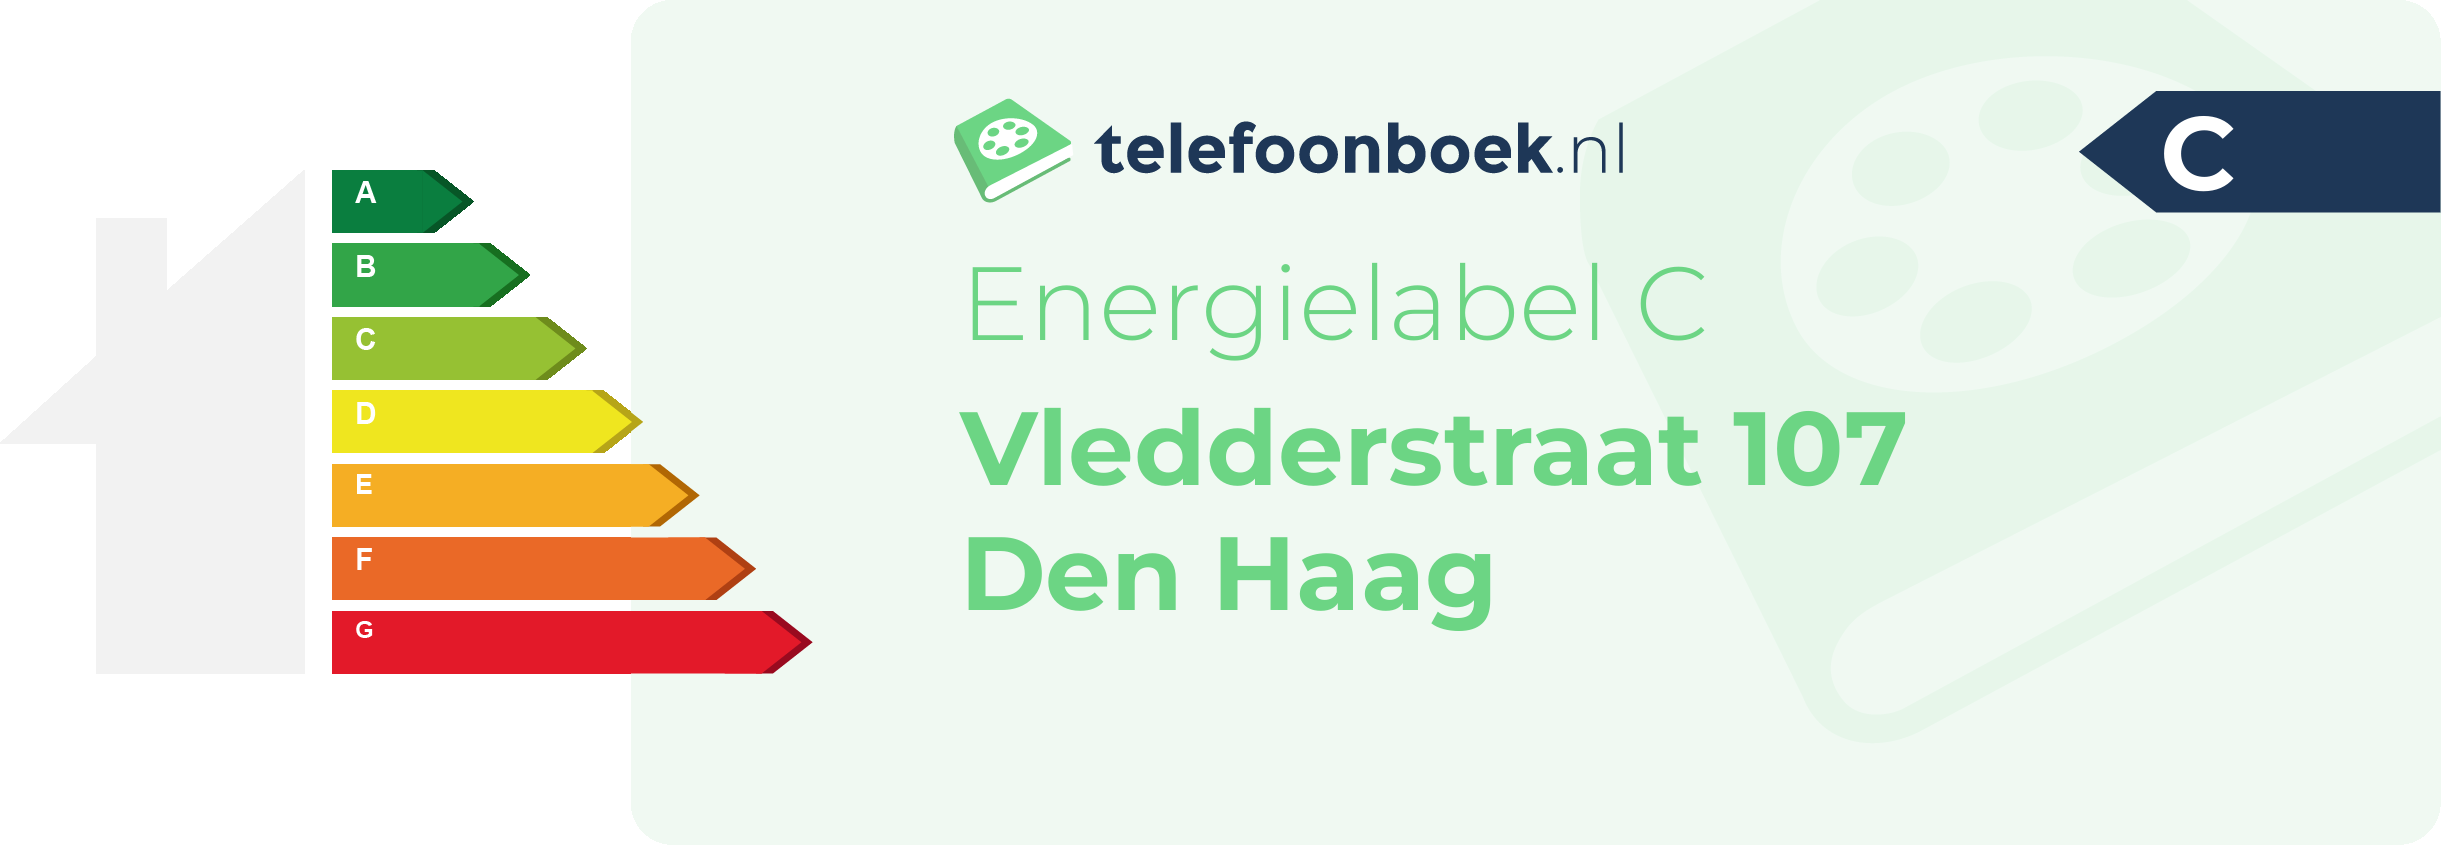 Energielabel Vledderstraat 107 Den Haag